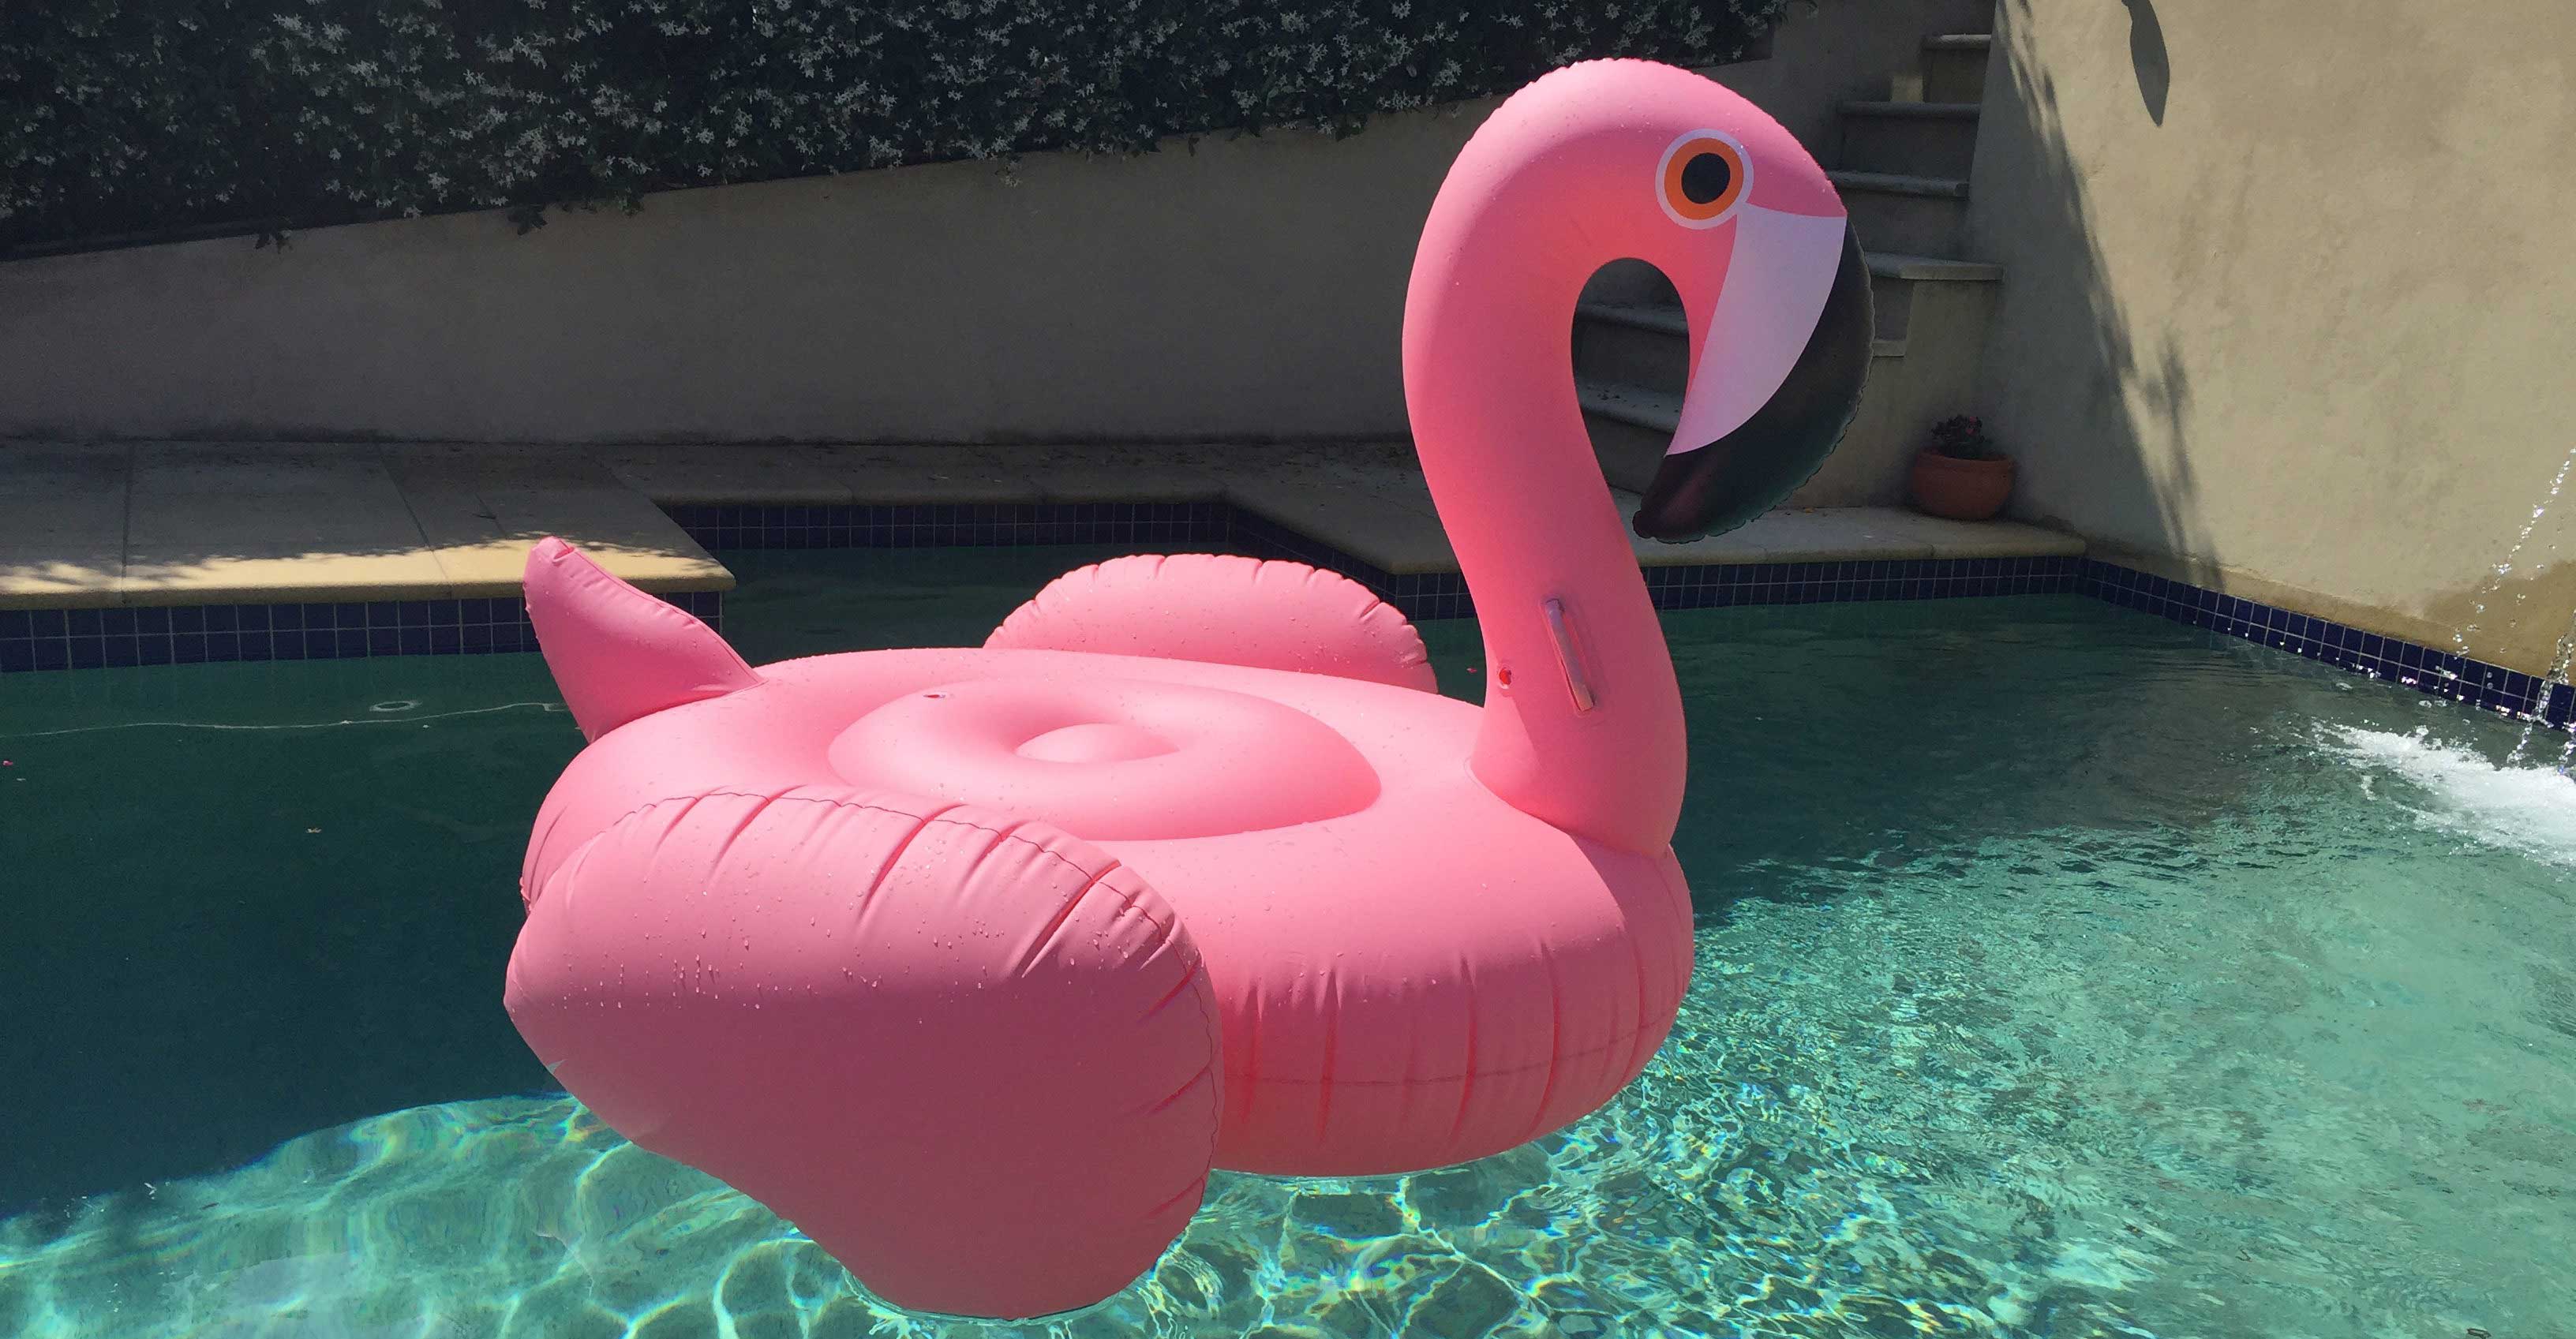 Pink Junk Flamingo in pool